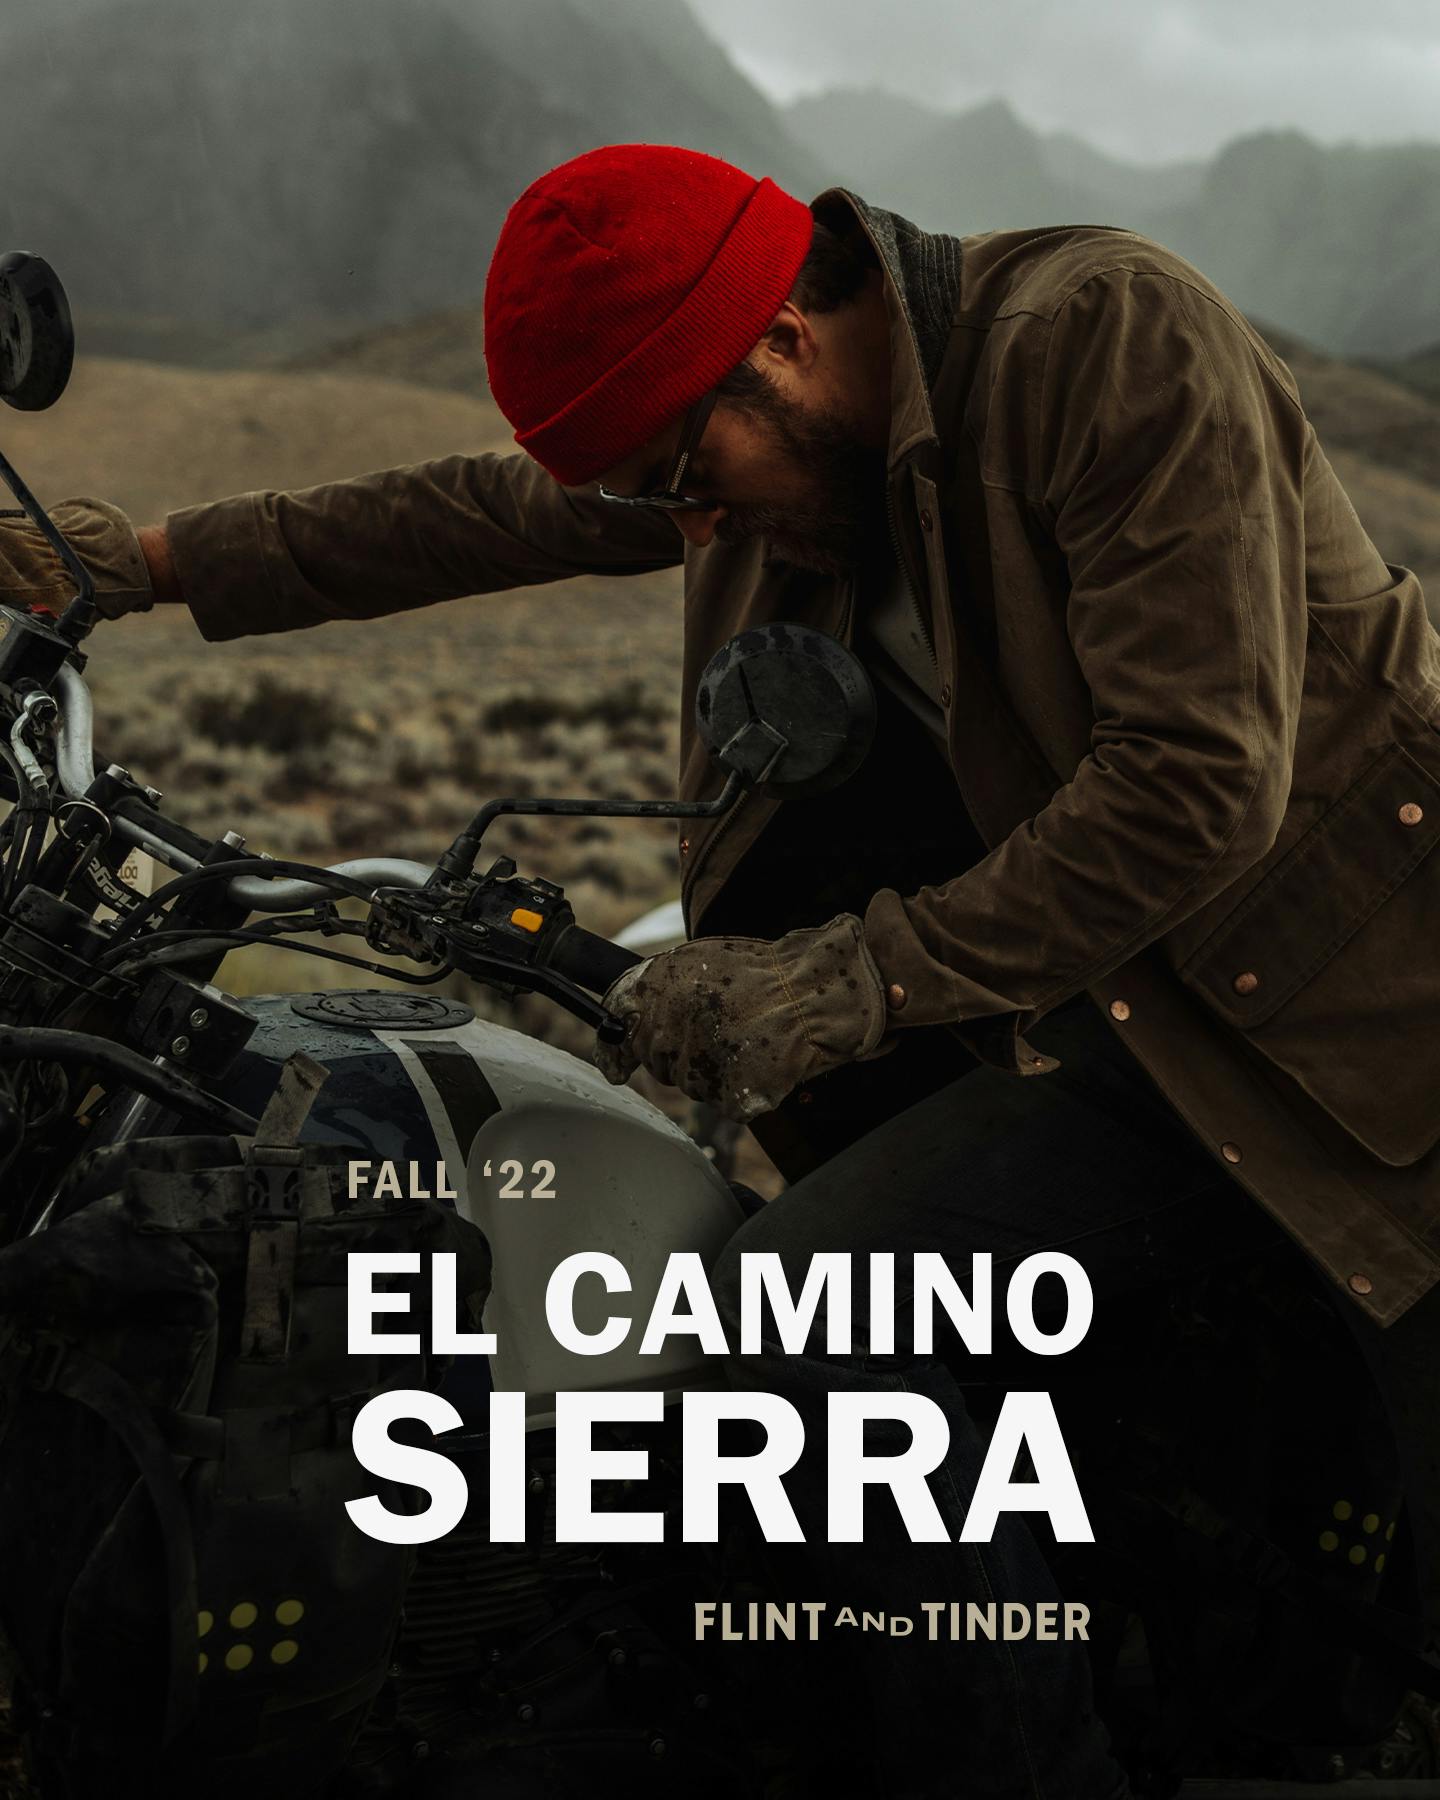 El Camino Sierra - Fall 2022 Flint and Tinder